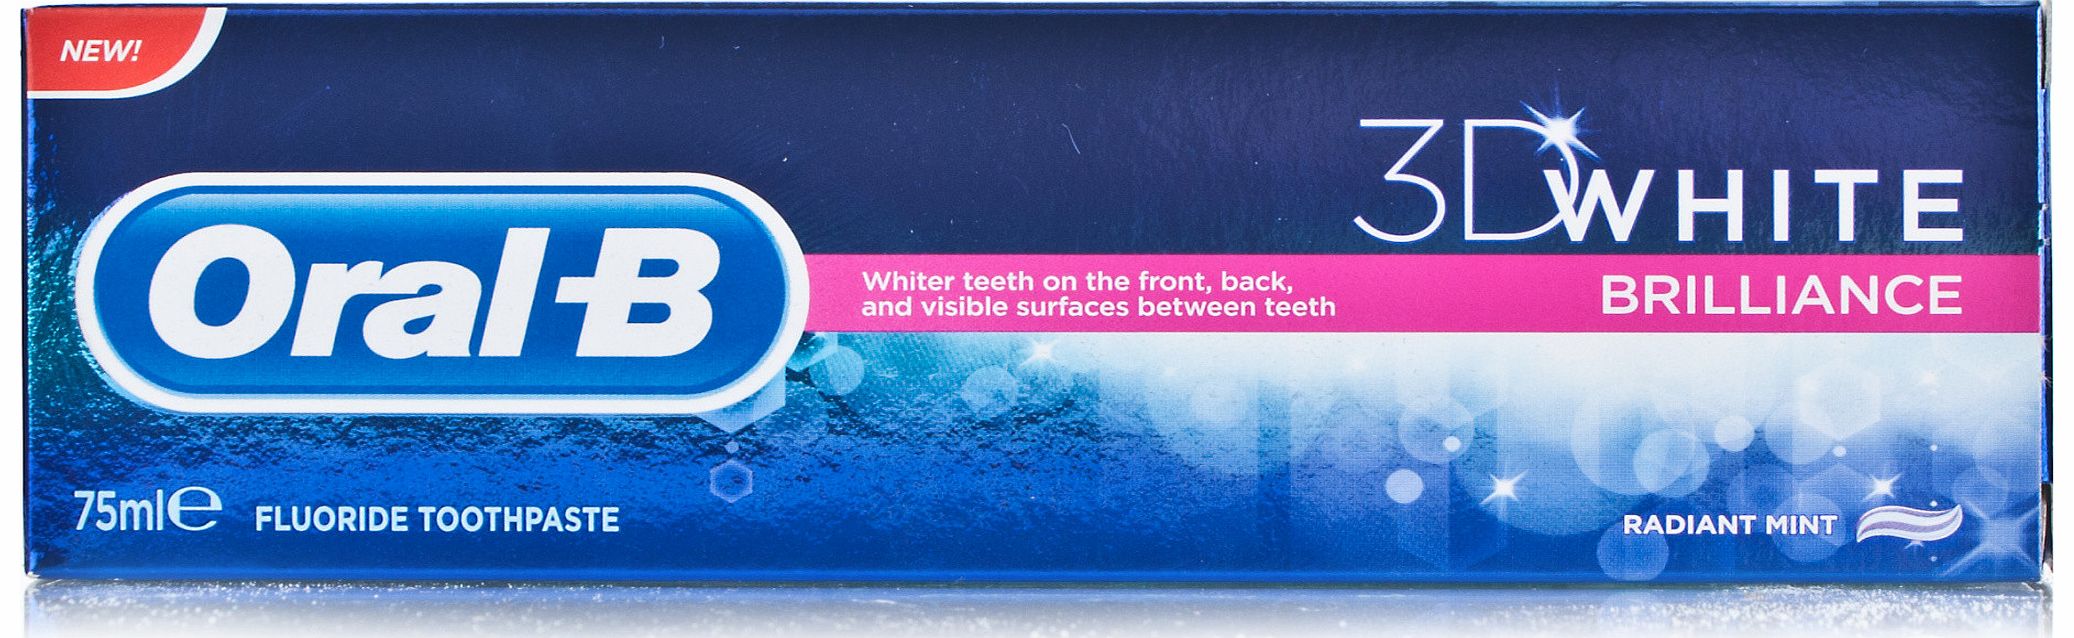 Oral B 3D Whitening Brilliance Toothpaste